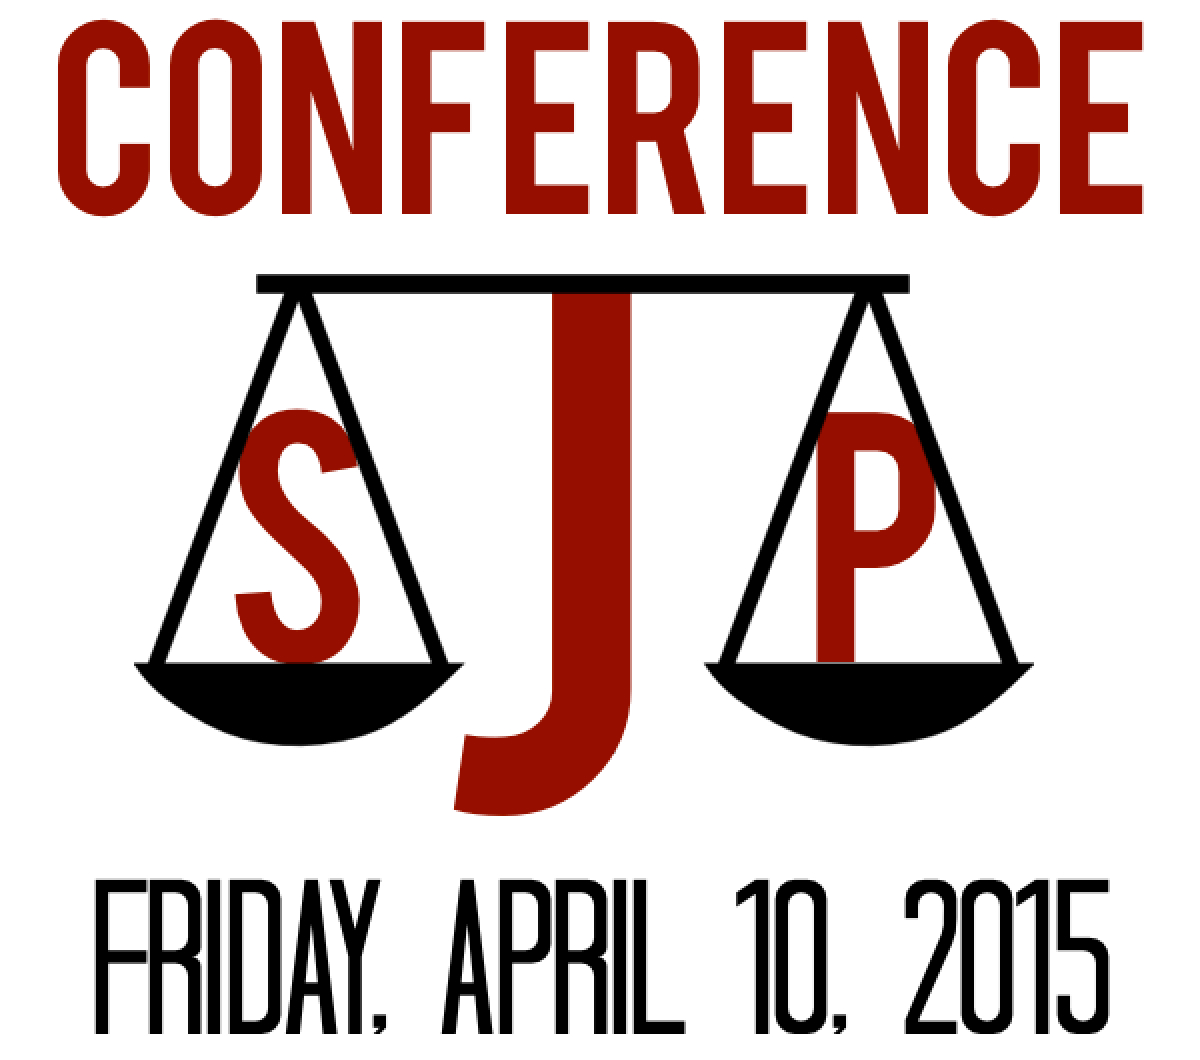 conference-image-2015-sjc